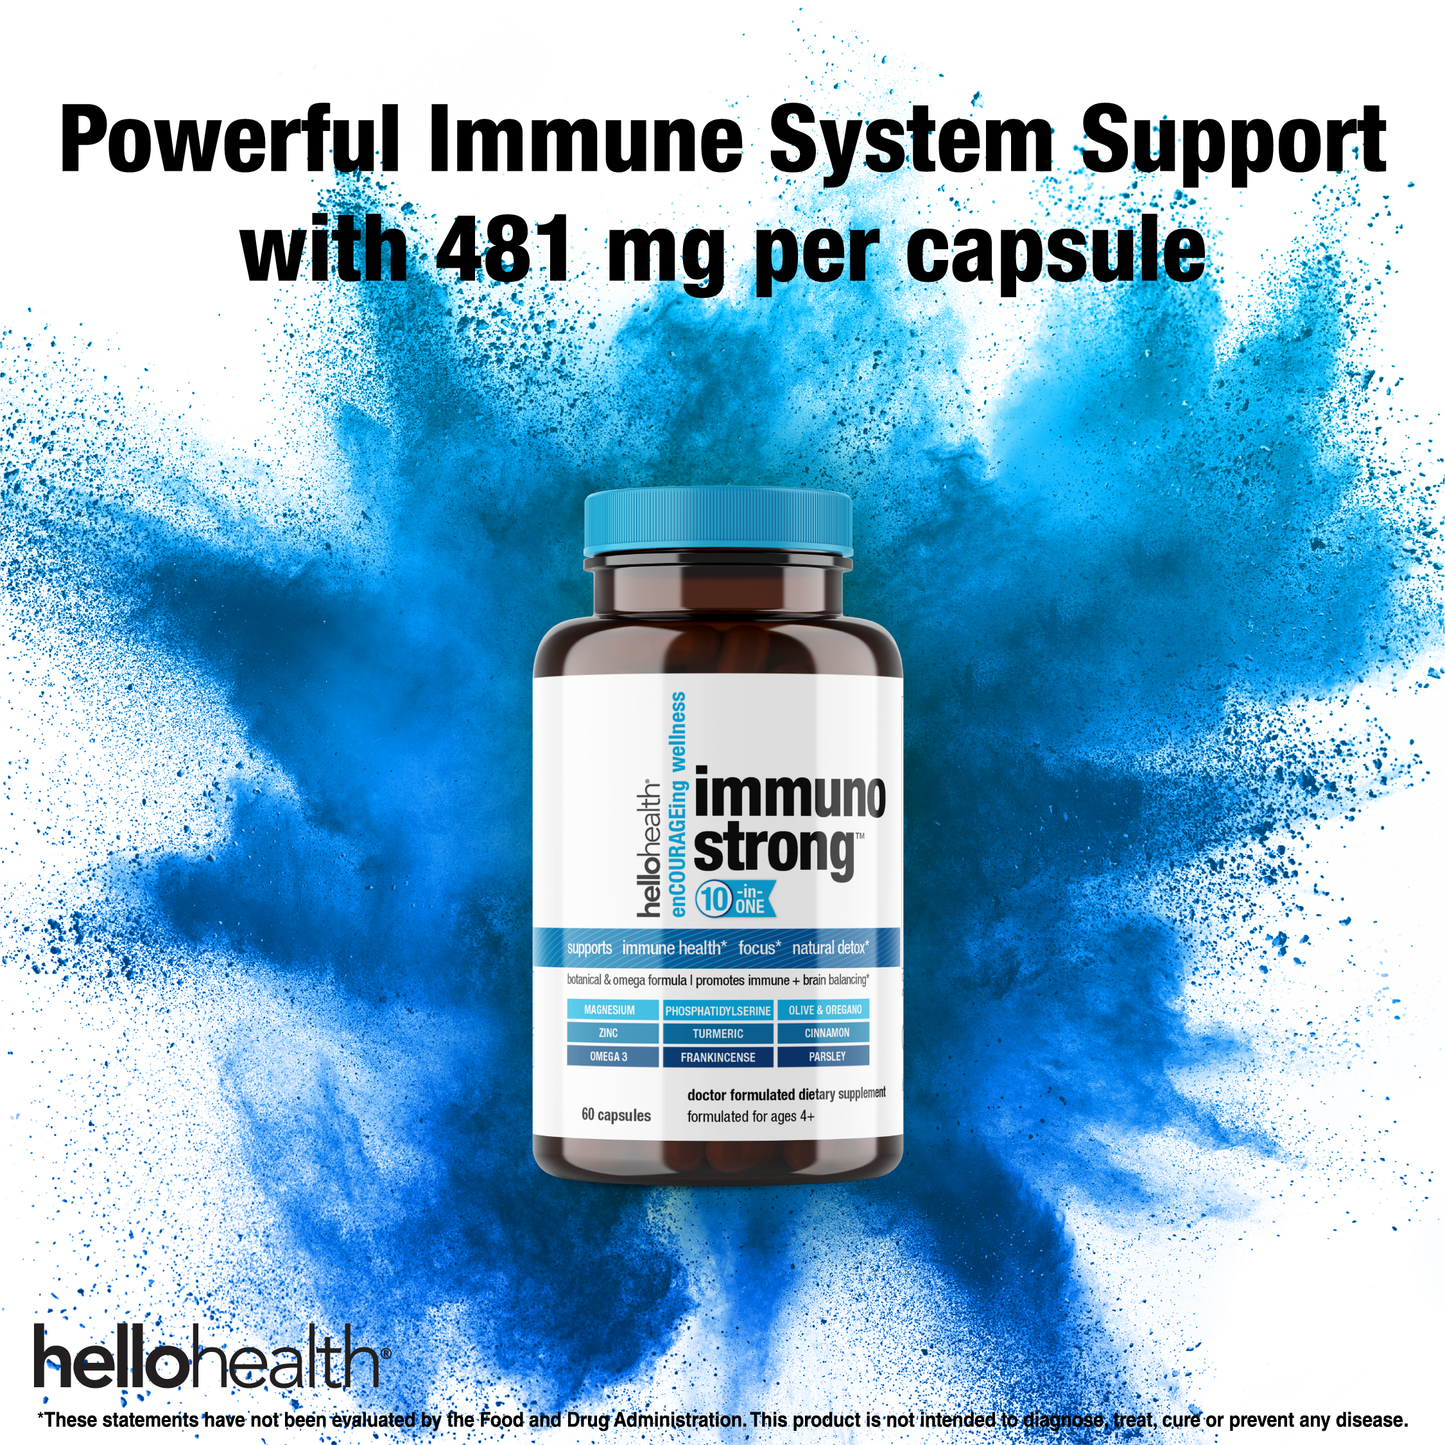 10-in-1 Immune Support Natural & Detox capsules